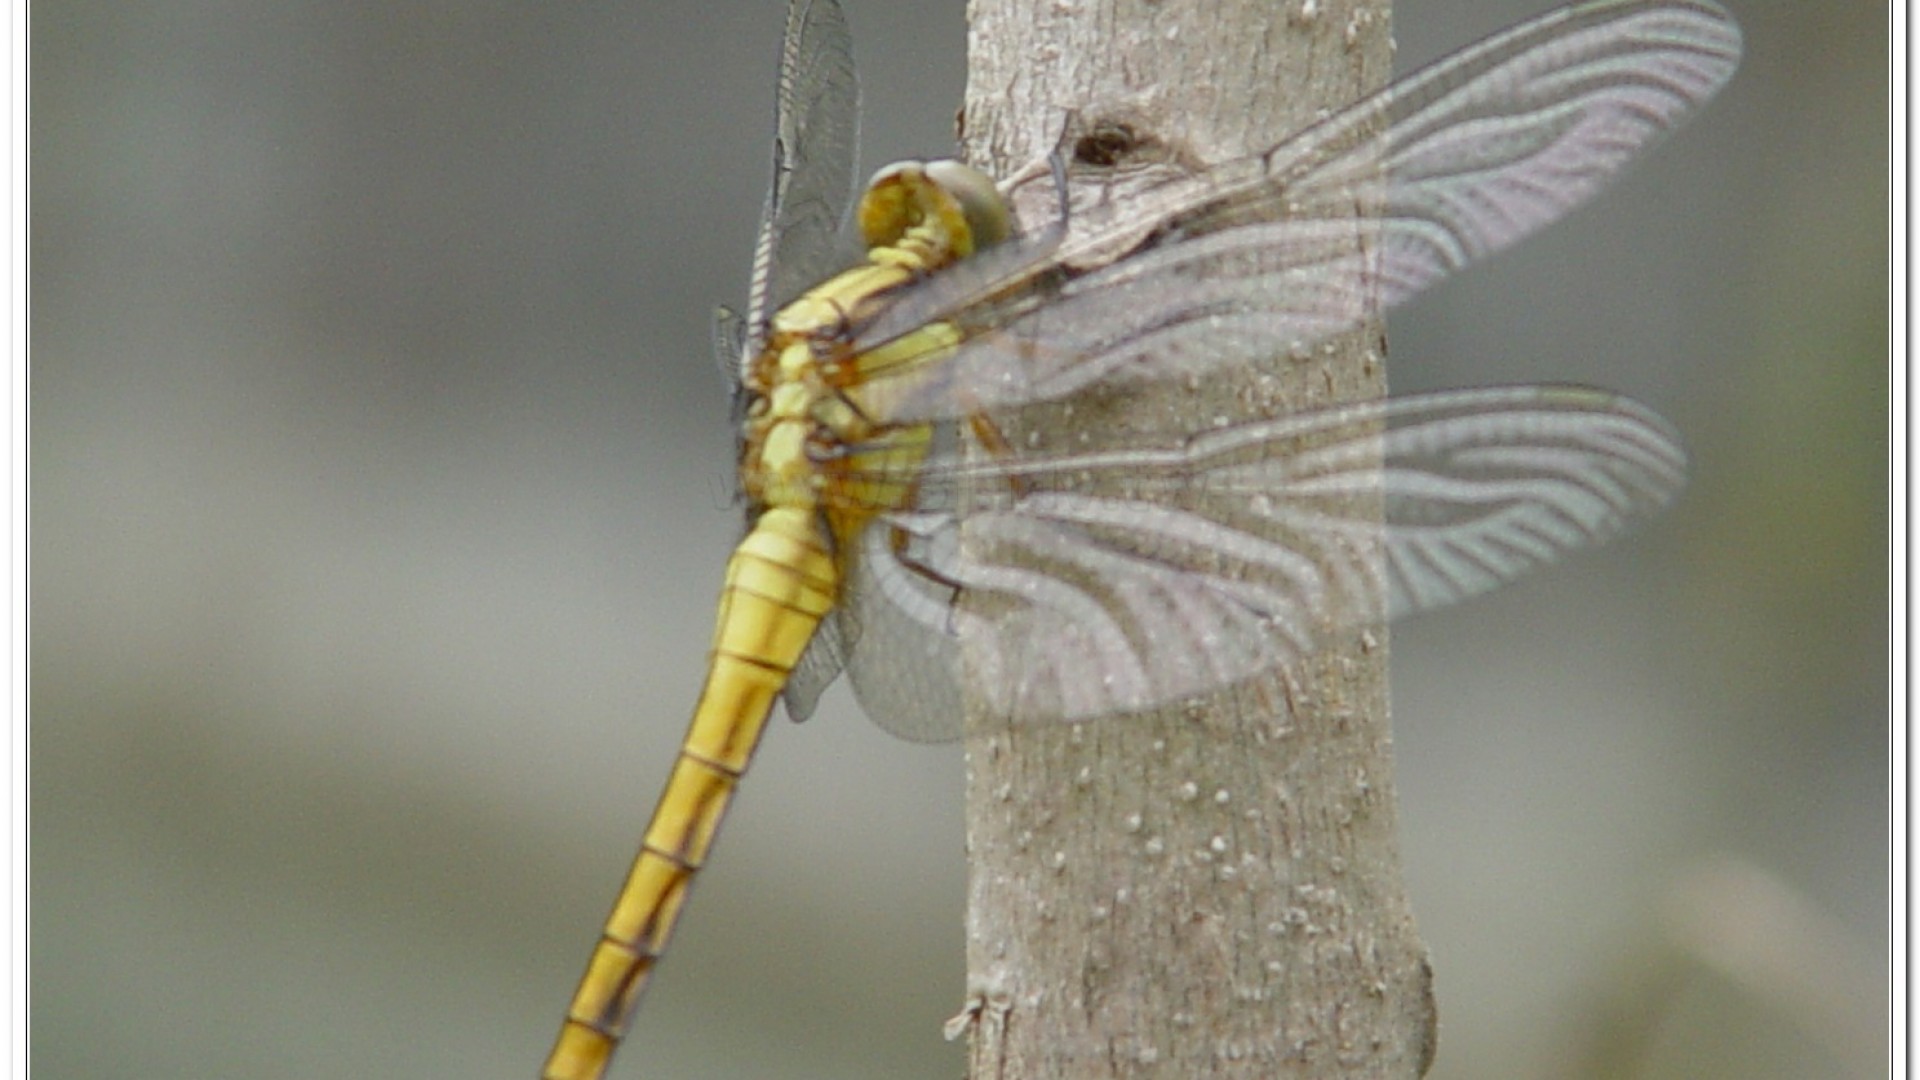 金黃蜻蜓(Orthetrum glaucum )